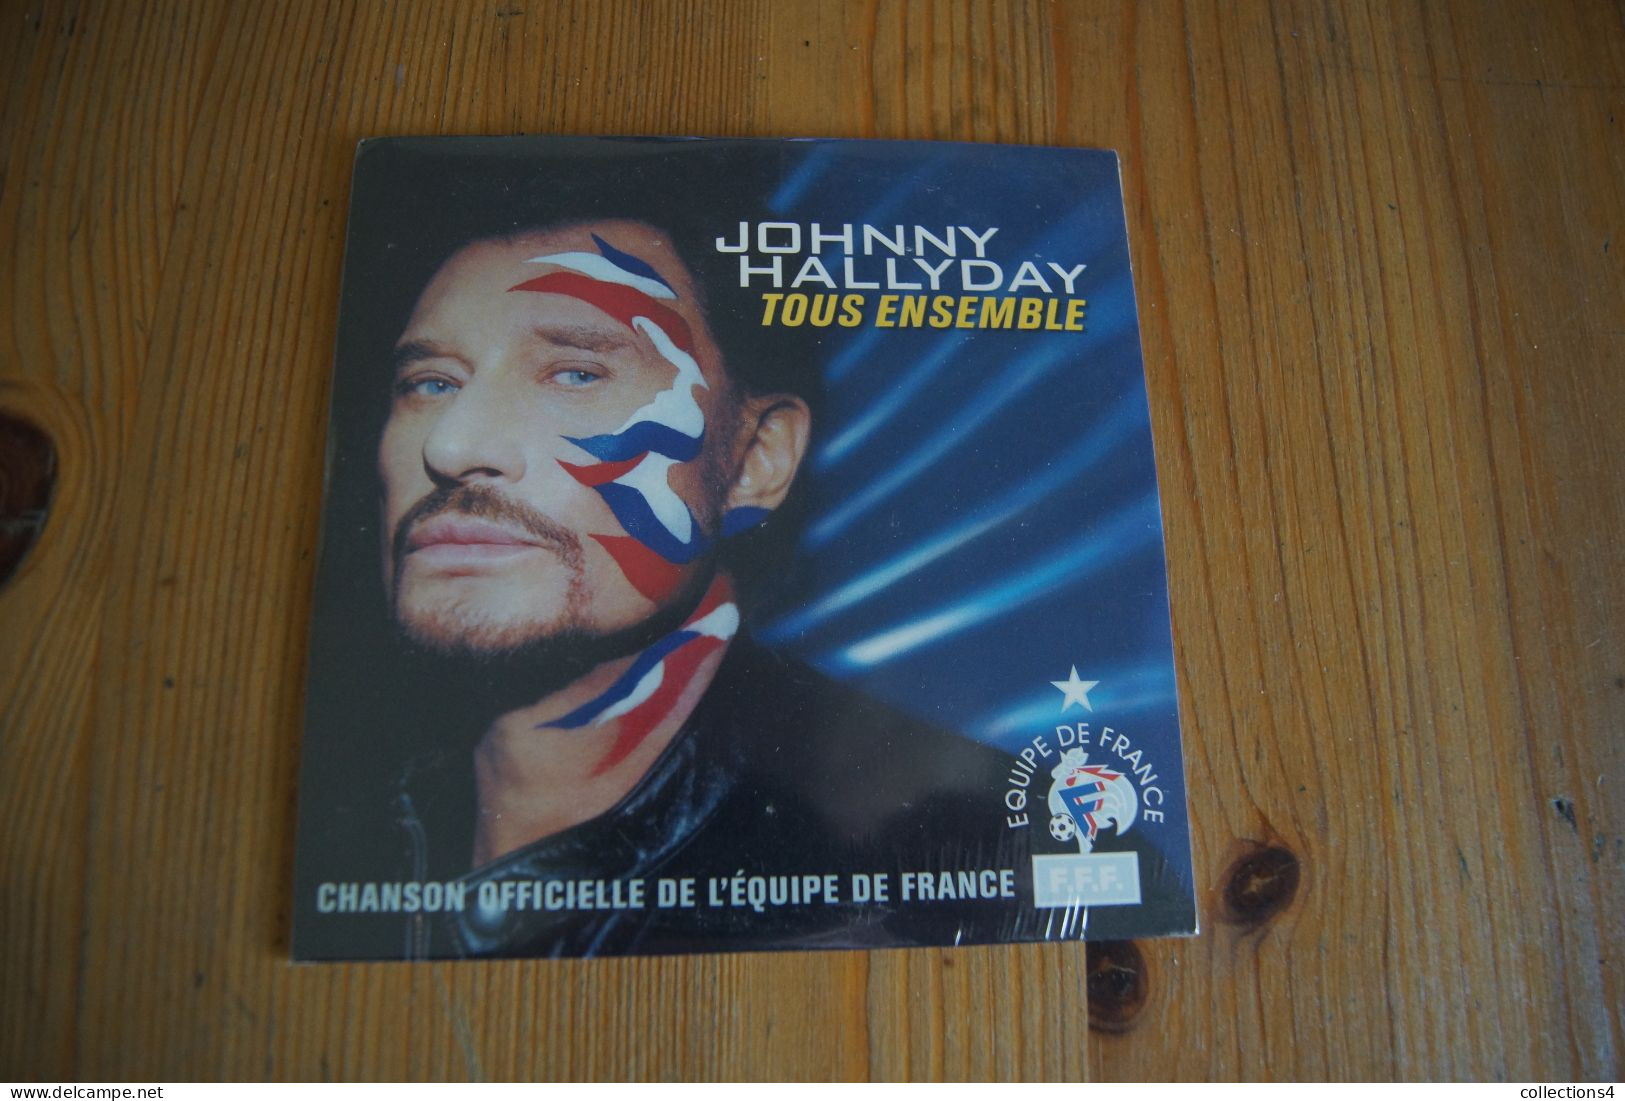 JOHNNY HALLYDAY TOUS ENSEMBLE CD NEUF SCELLE CHANSON EQUIPE DE FRANCE 2002 - Rock